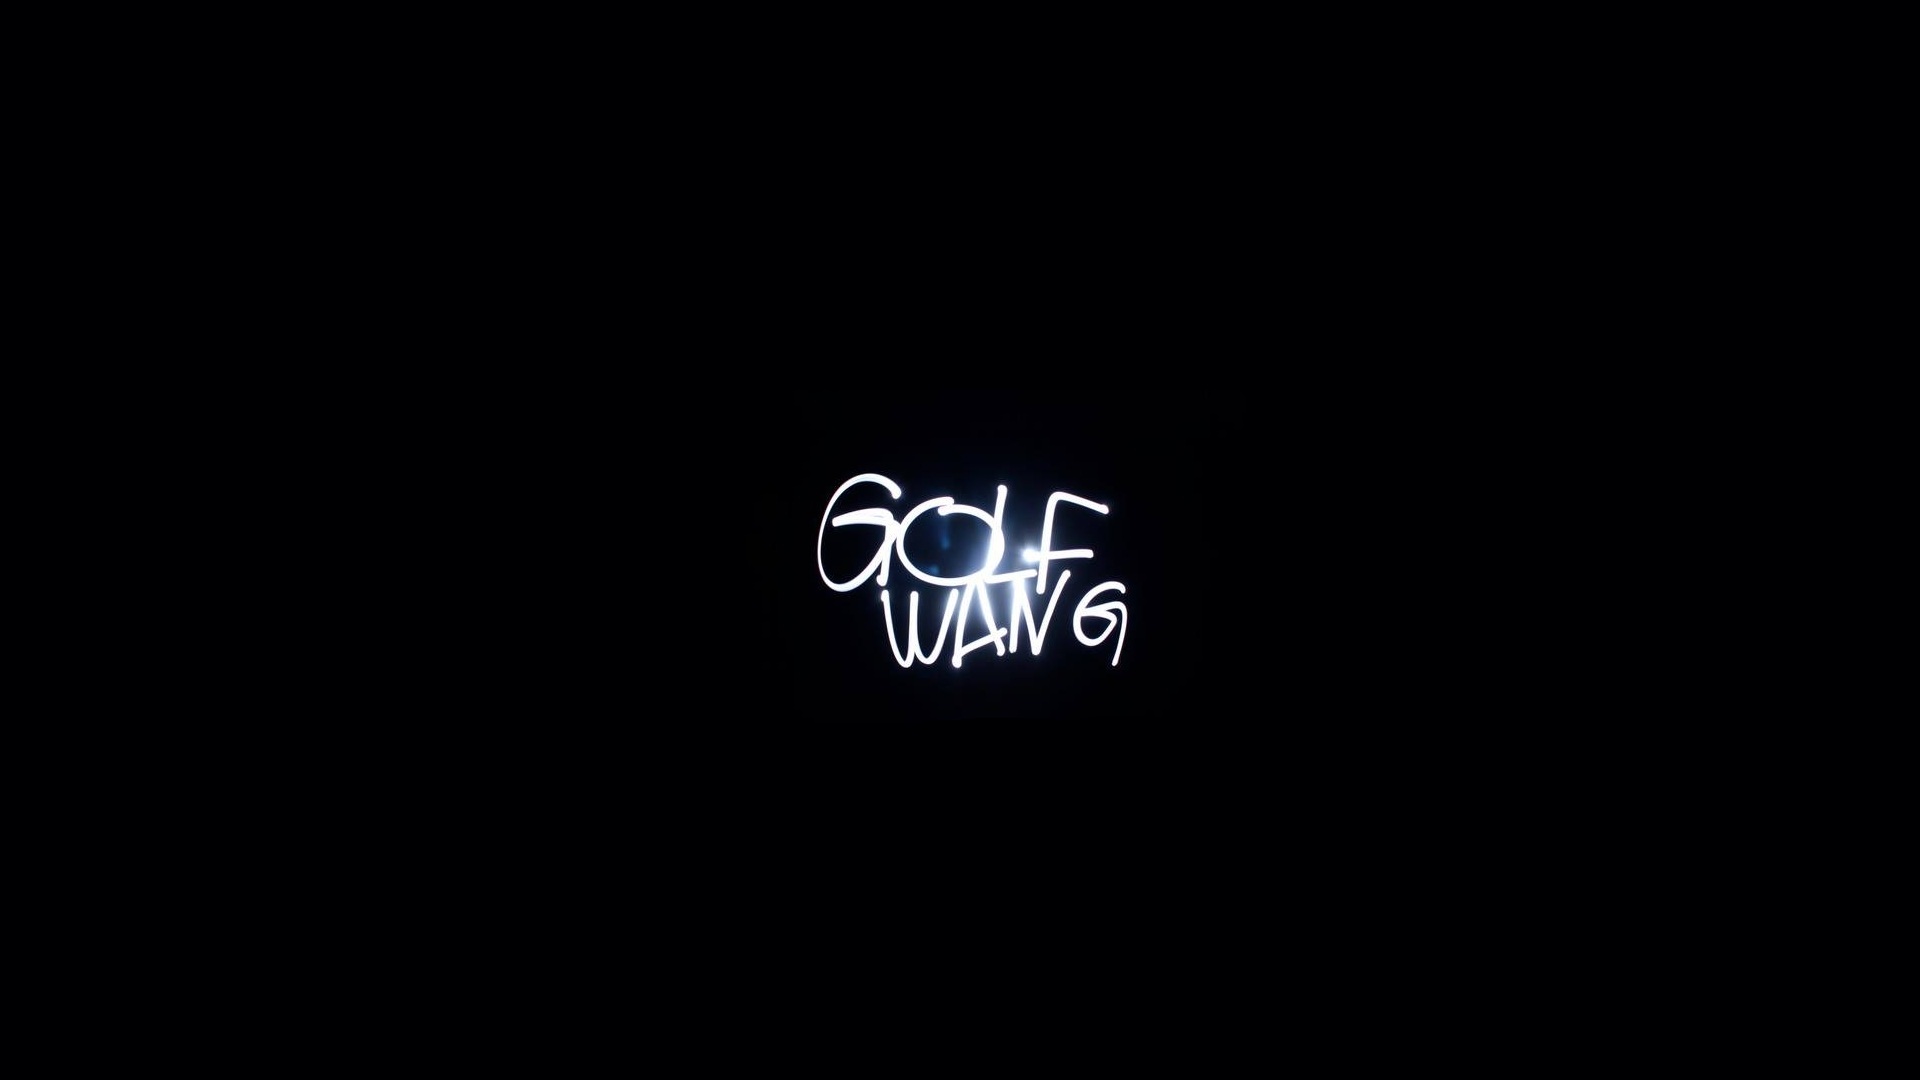 Golf Wang Cat Wallpaper